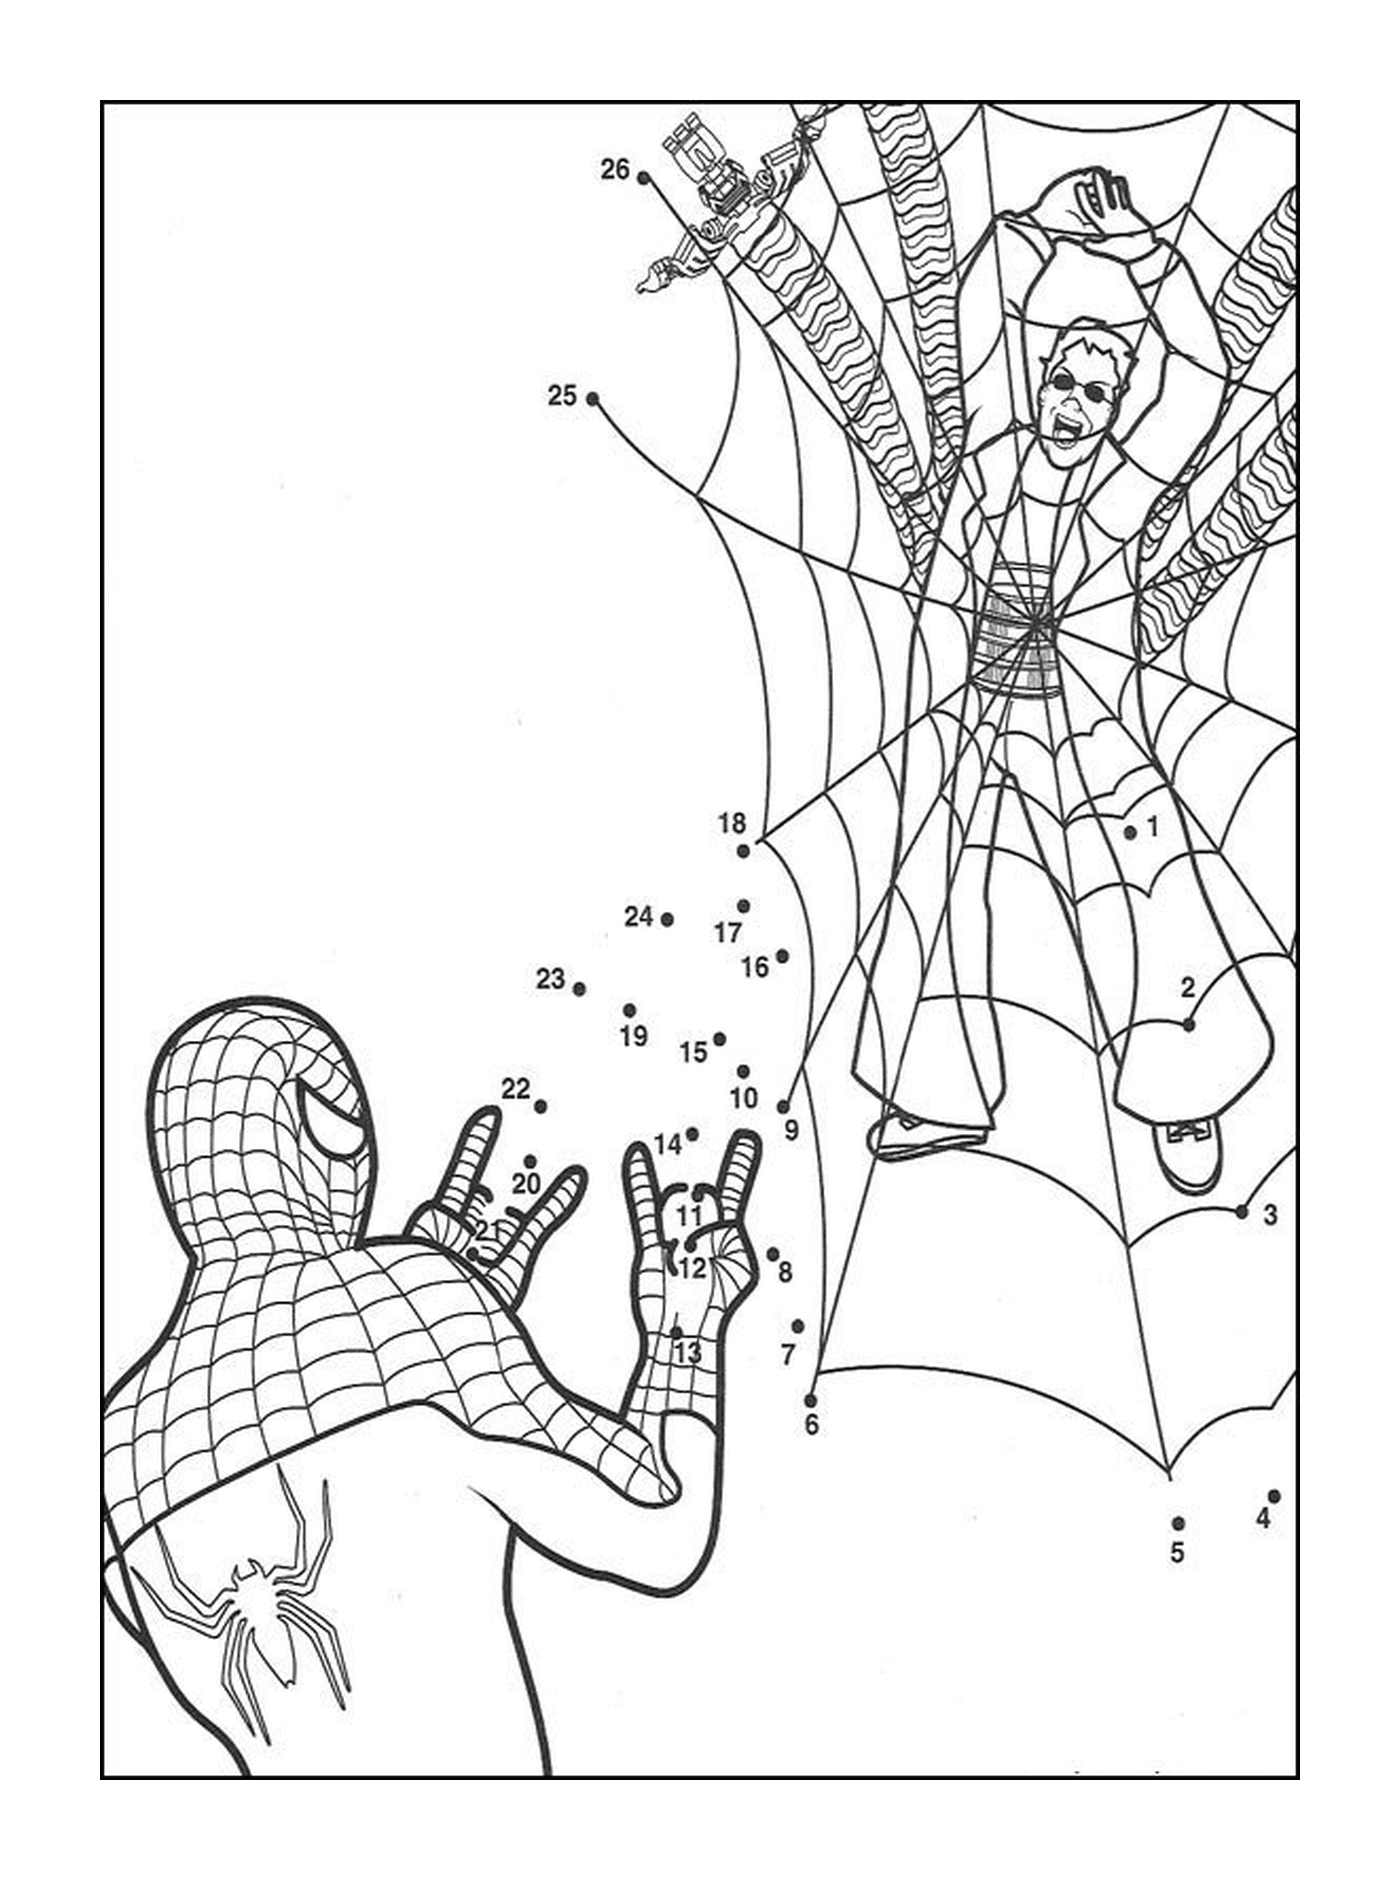  Spider-Man en puntos para conectar 